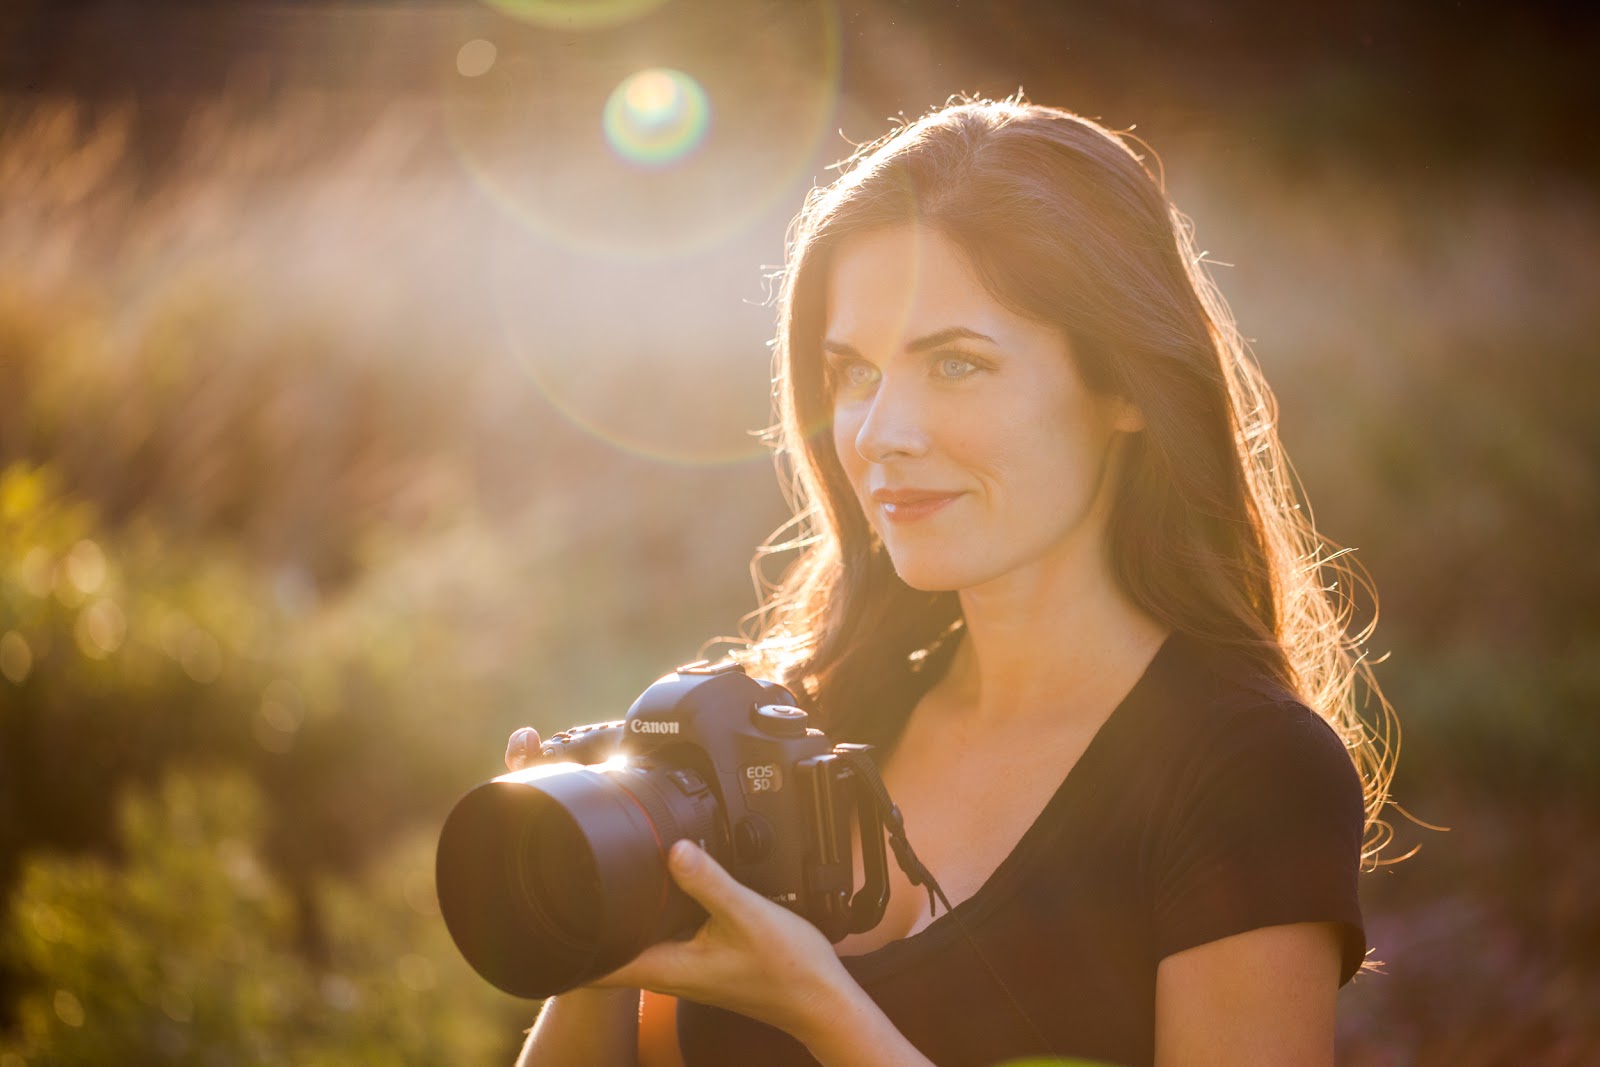 Lisa BettanySan Francisco, CA - Co-creator at Camera+Photographer & App